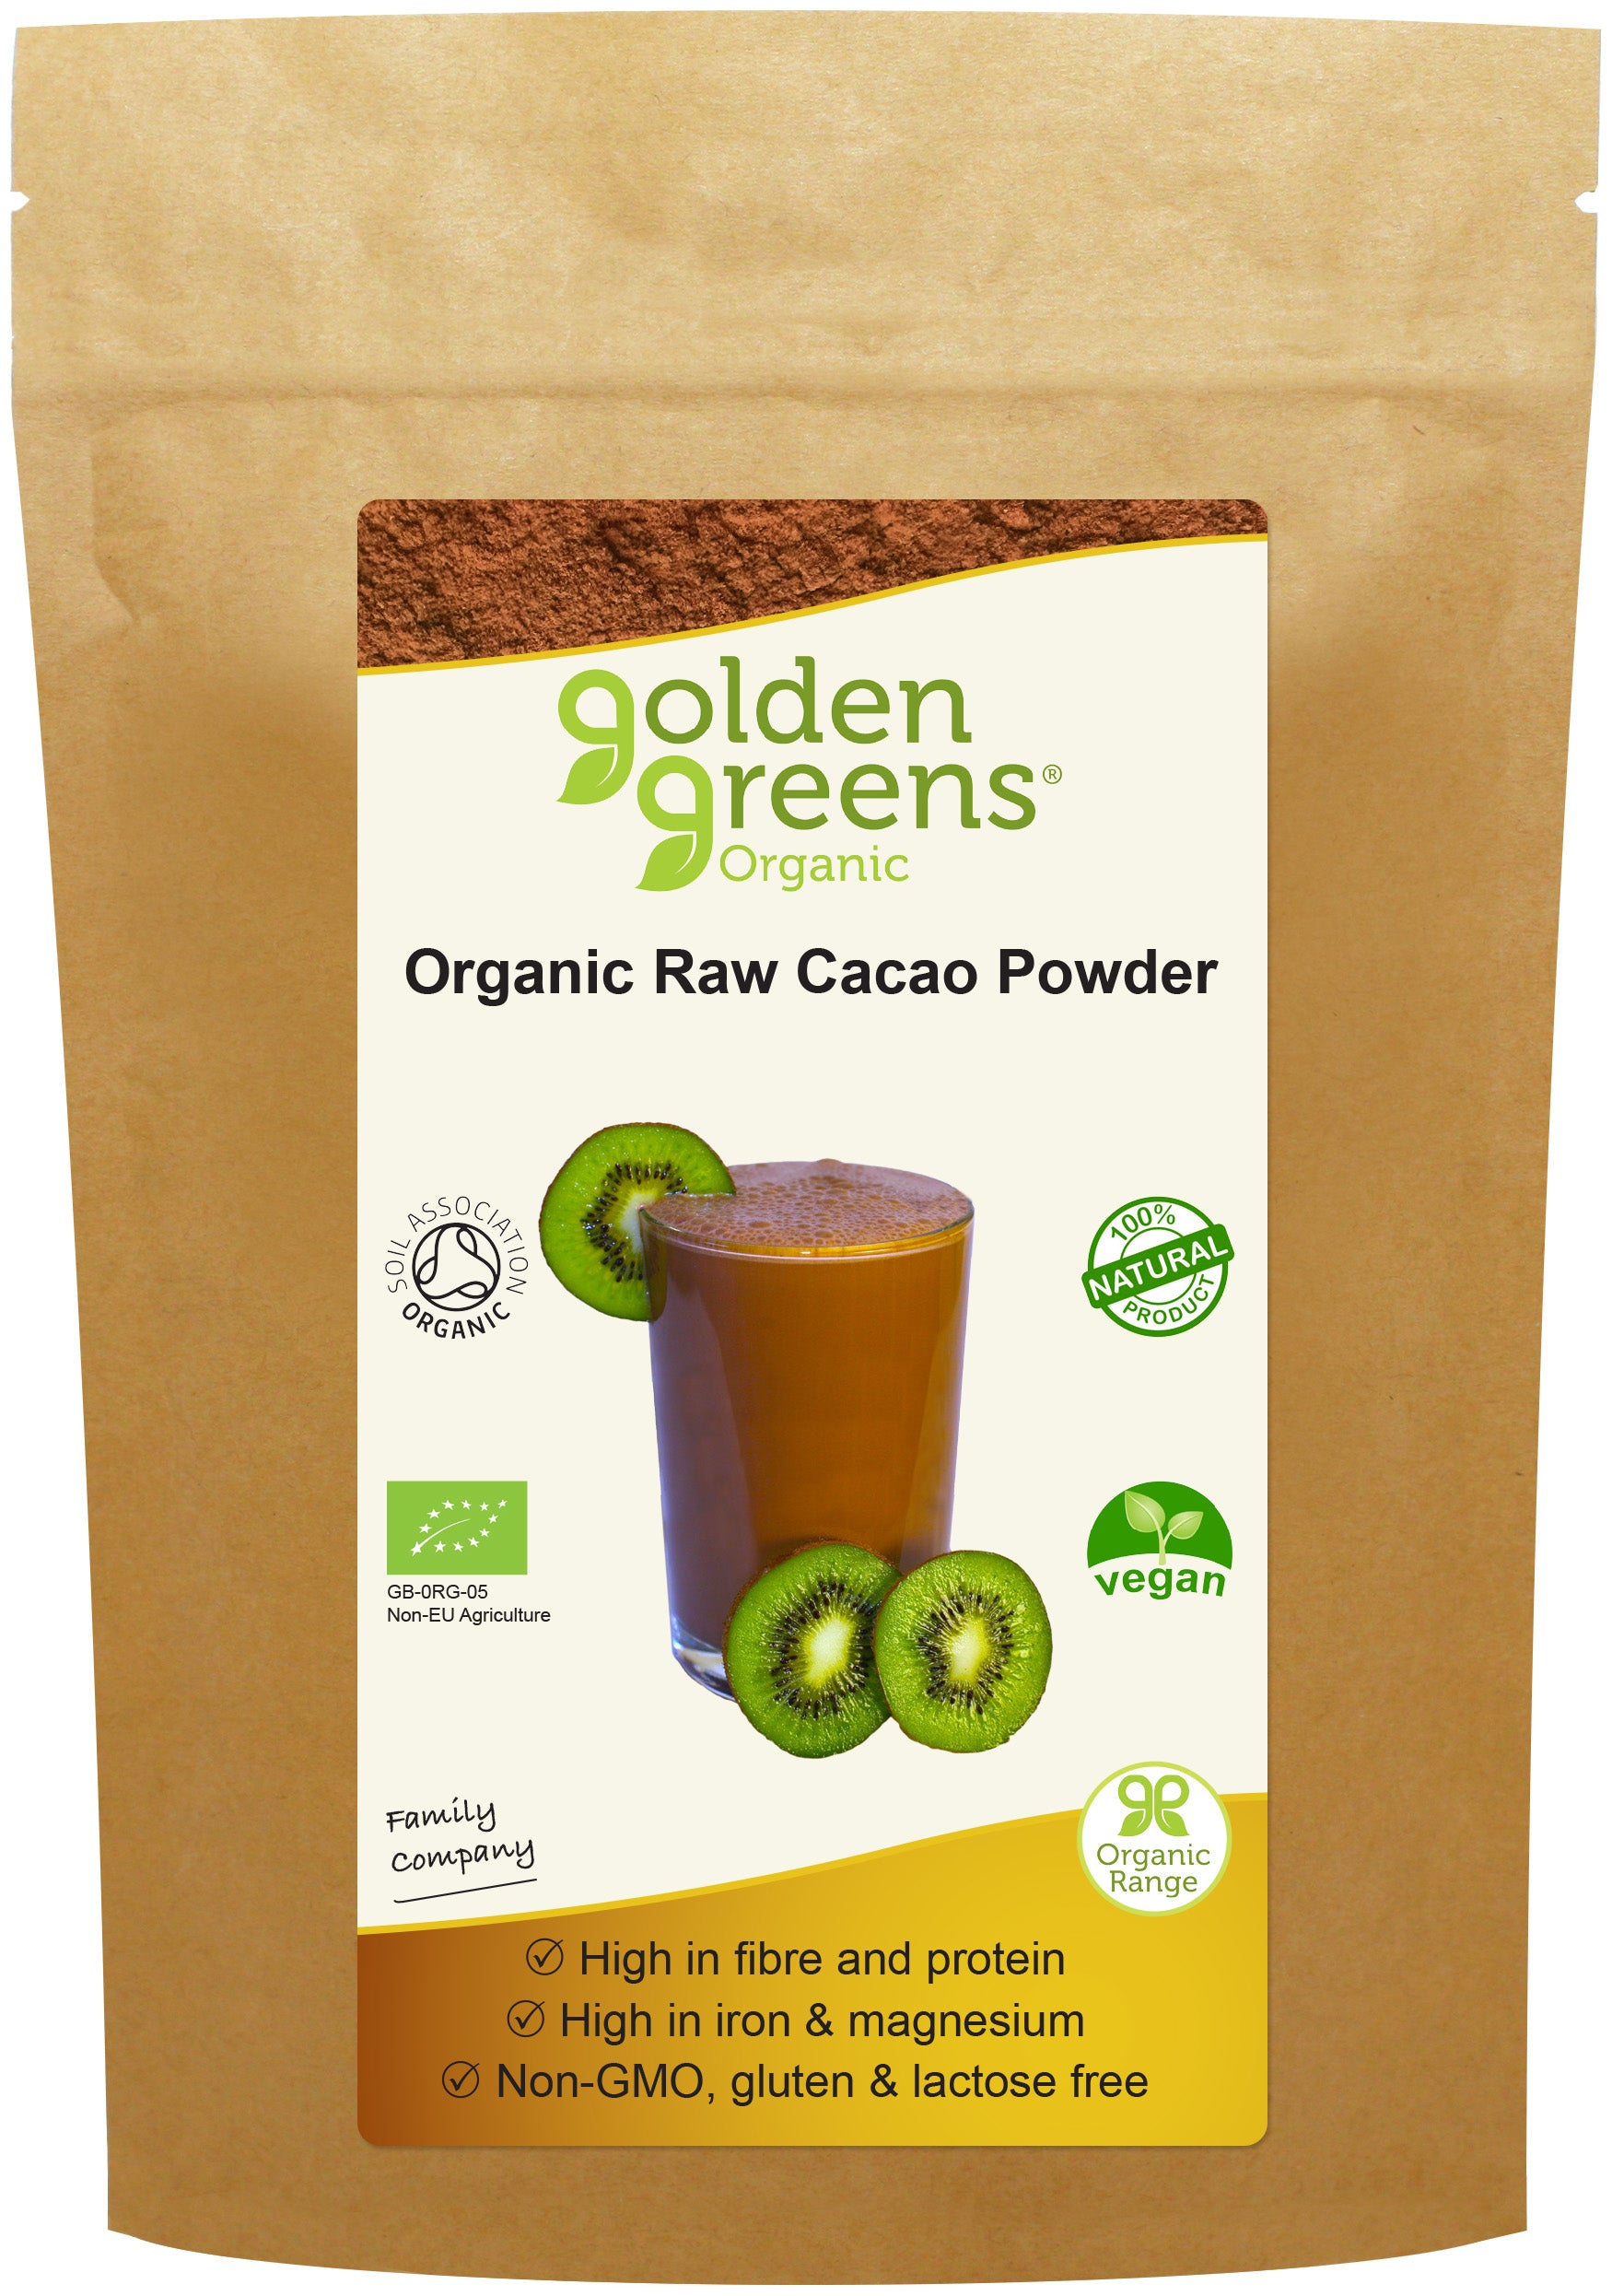 Golden Greens (Greens Organic) Organic Raw Cacao Powder 200g